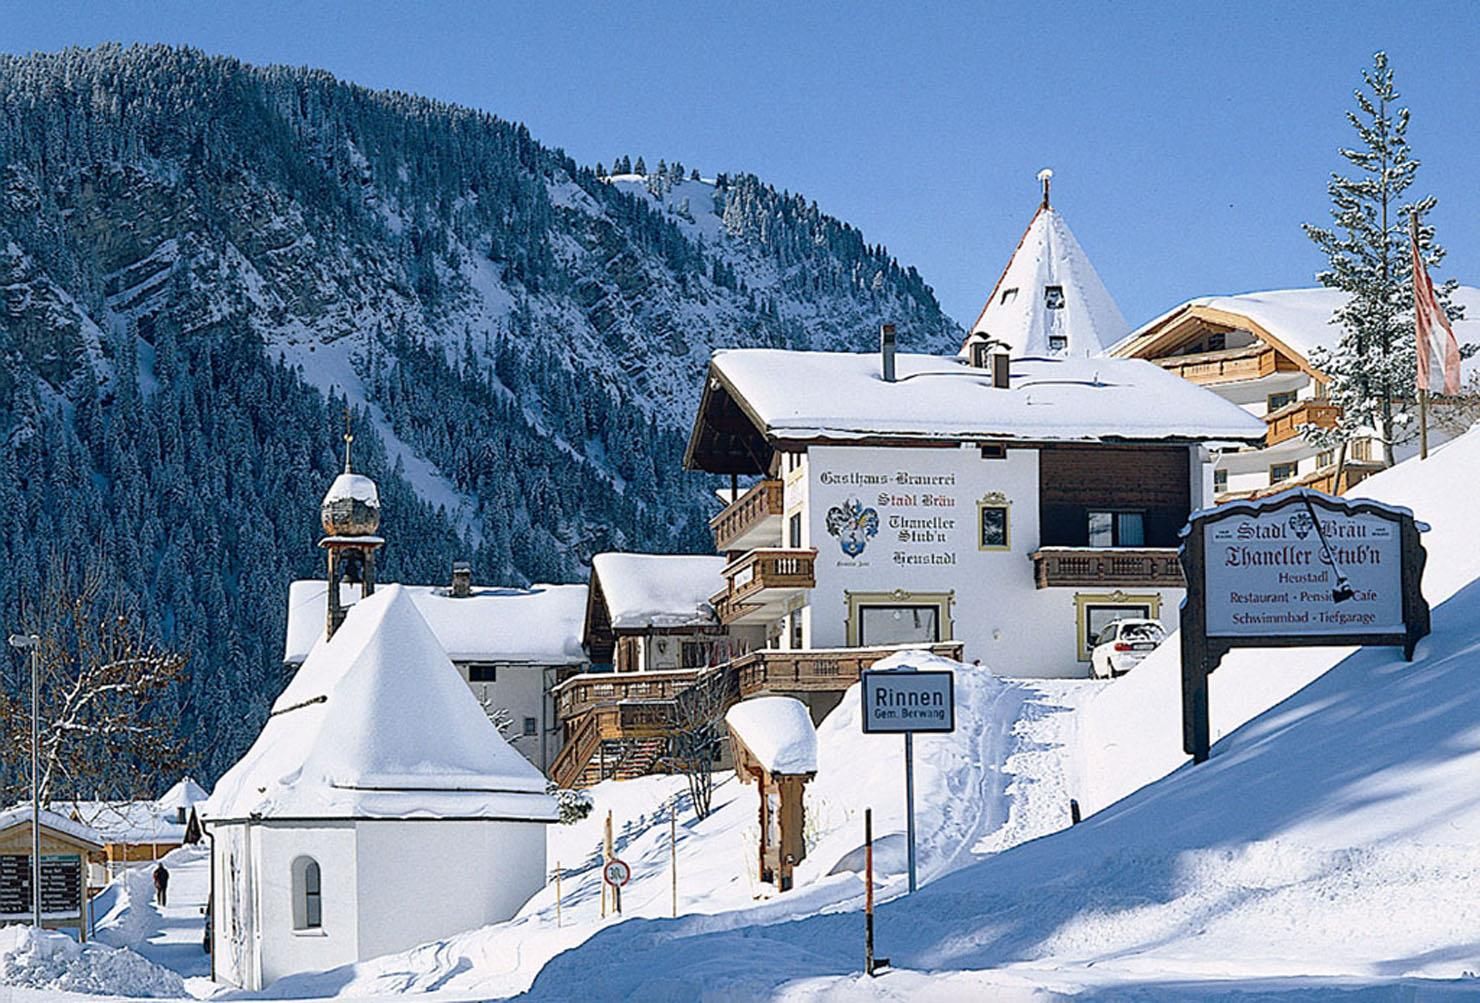 Korting wintersport Tiroler Zugspitz Arena ❄ Hotel Thaneller